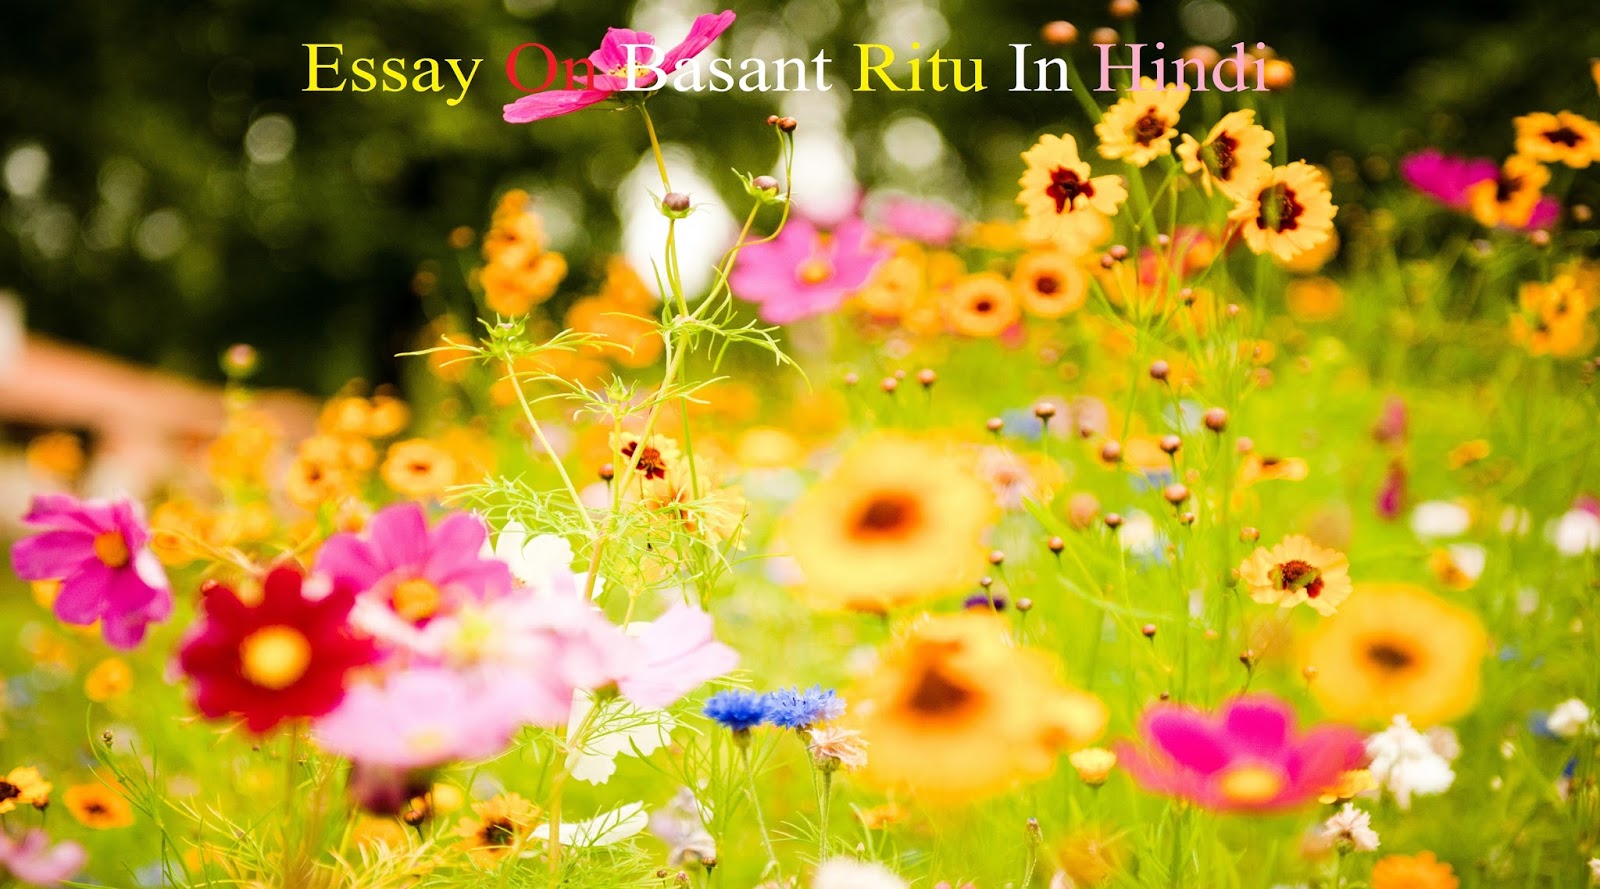 basant ritu essay in hindi